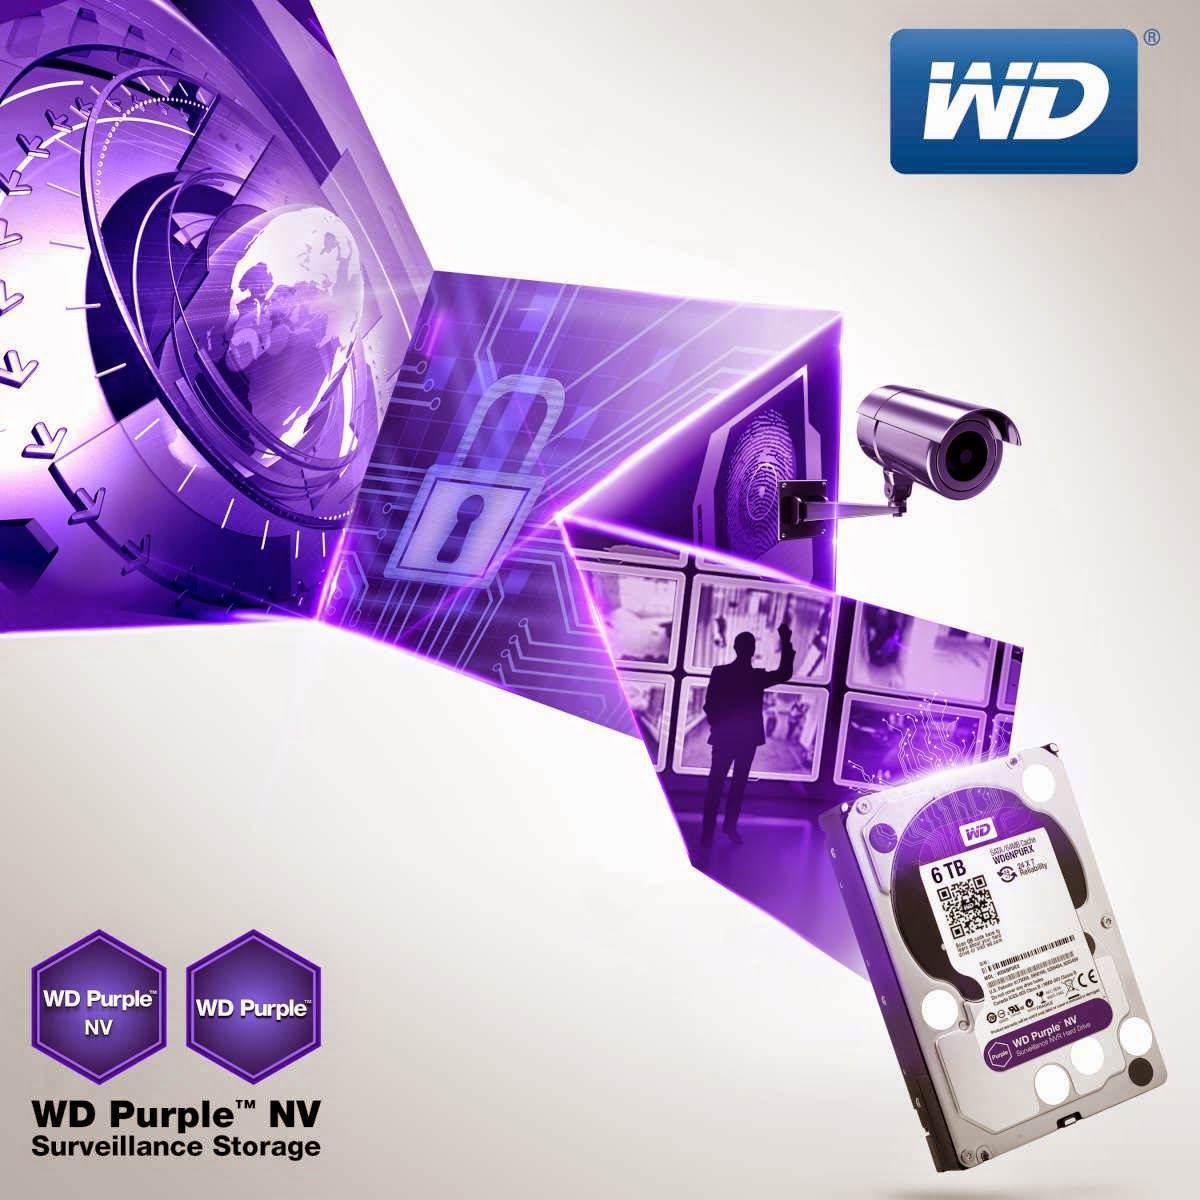 WD Purple NV